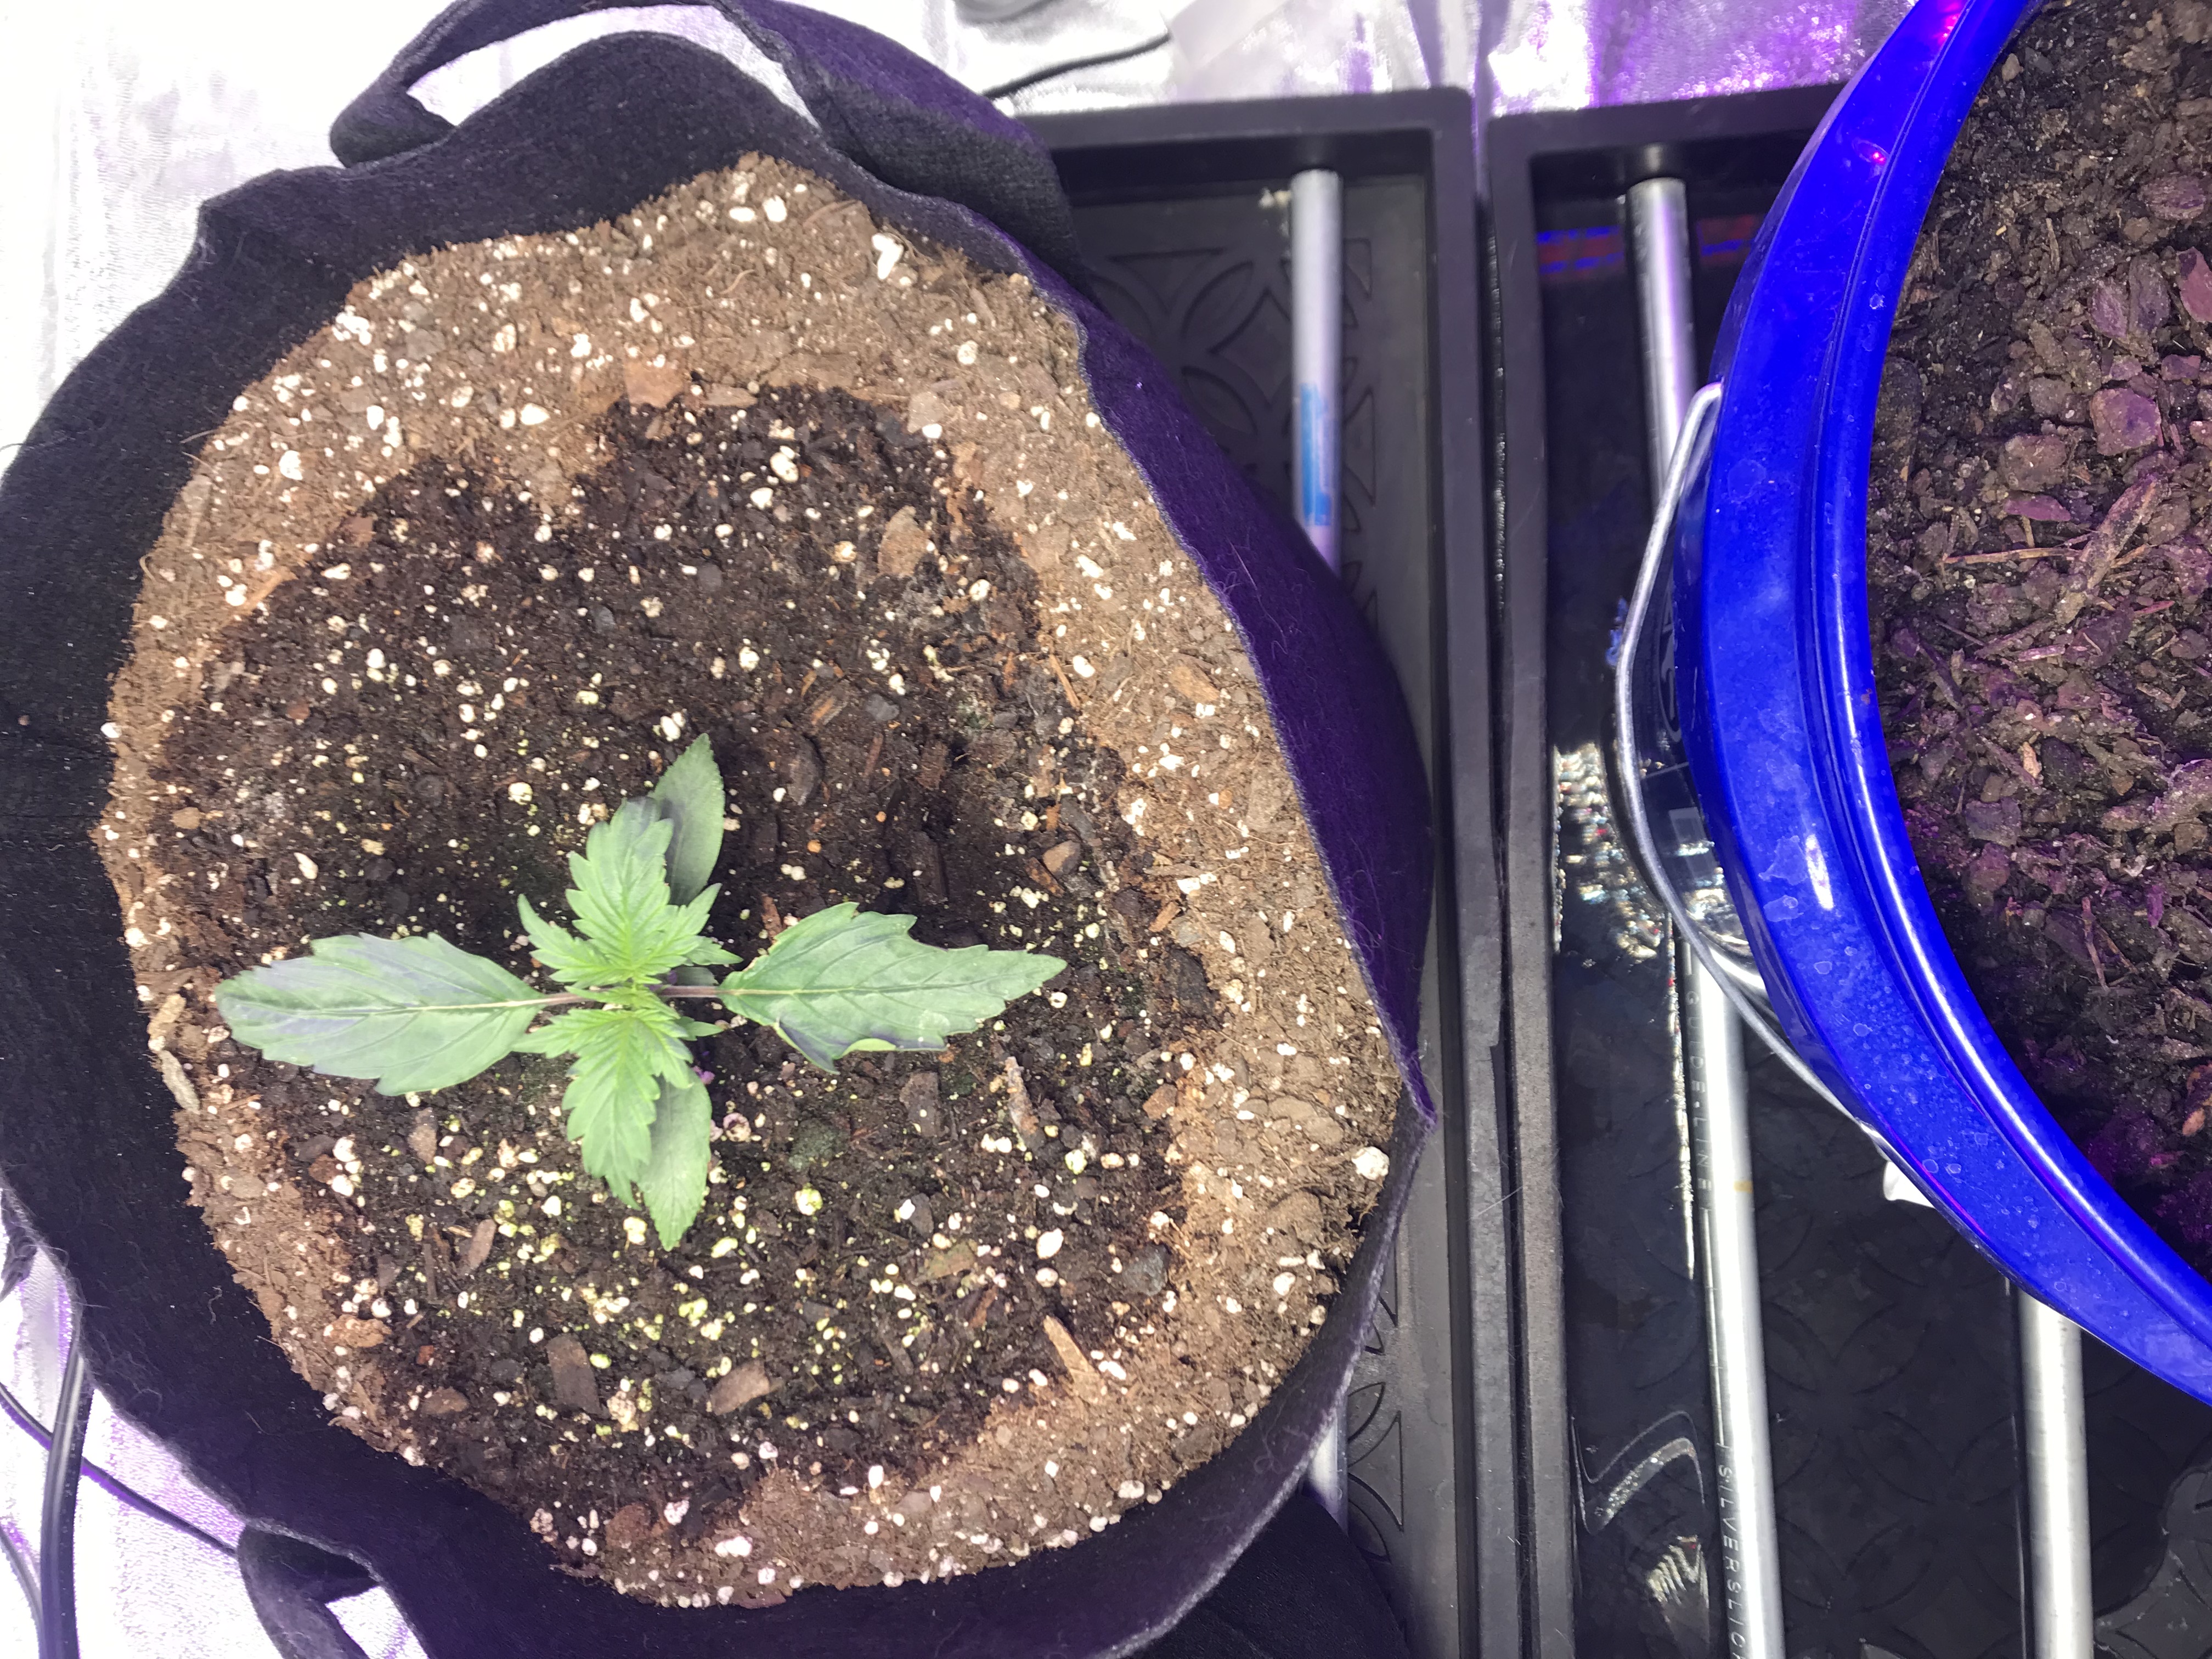 Week 2 Day 7 - Flowering Marijuana Strain